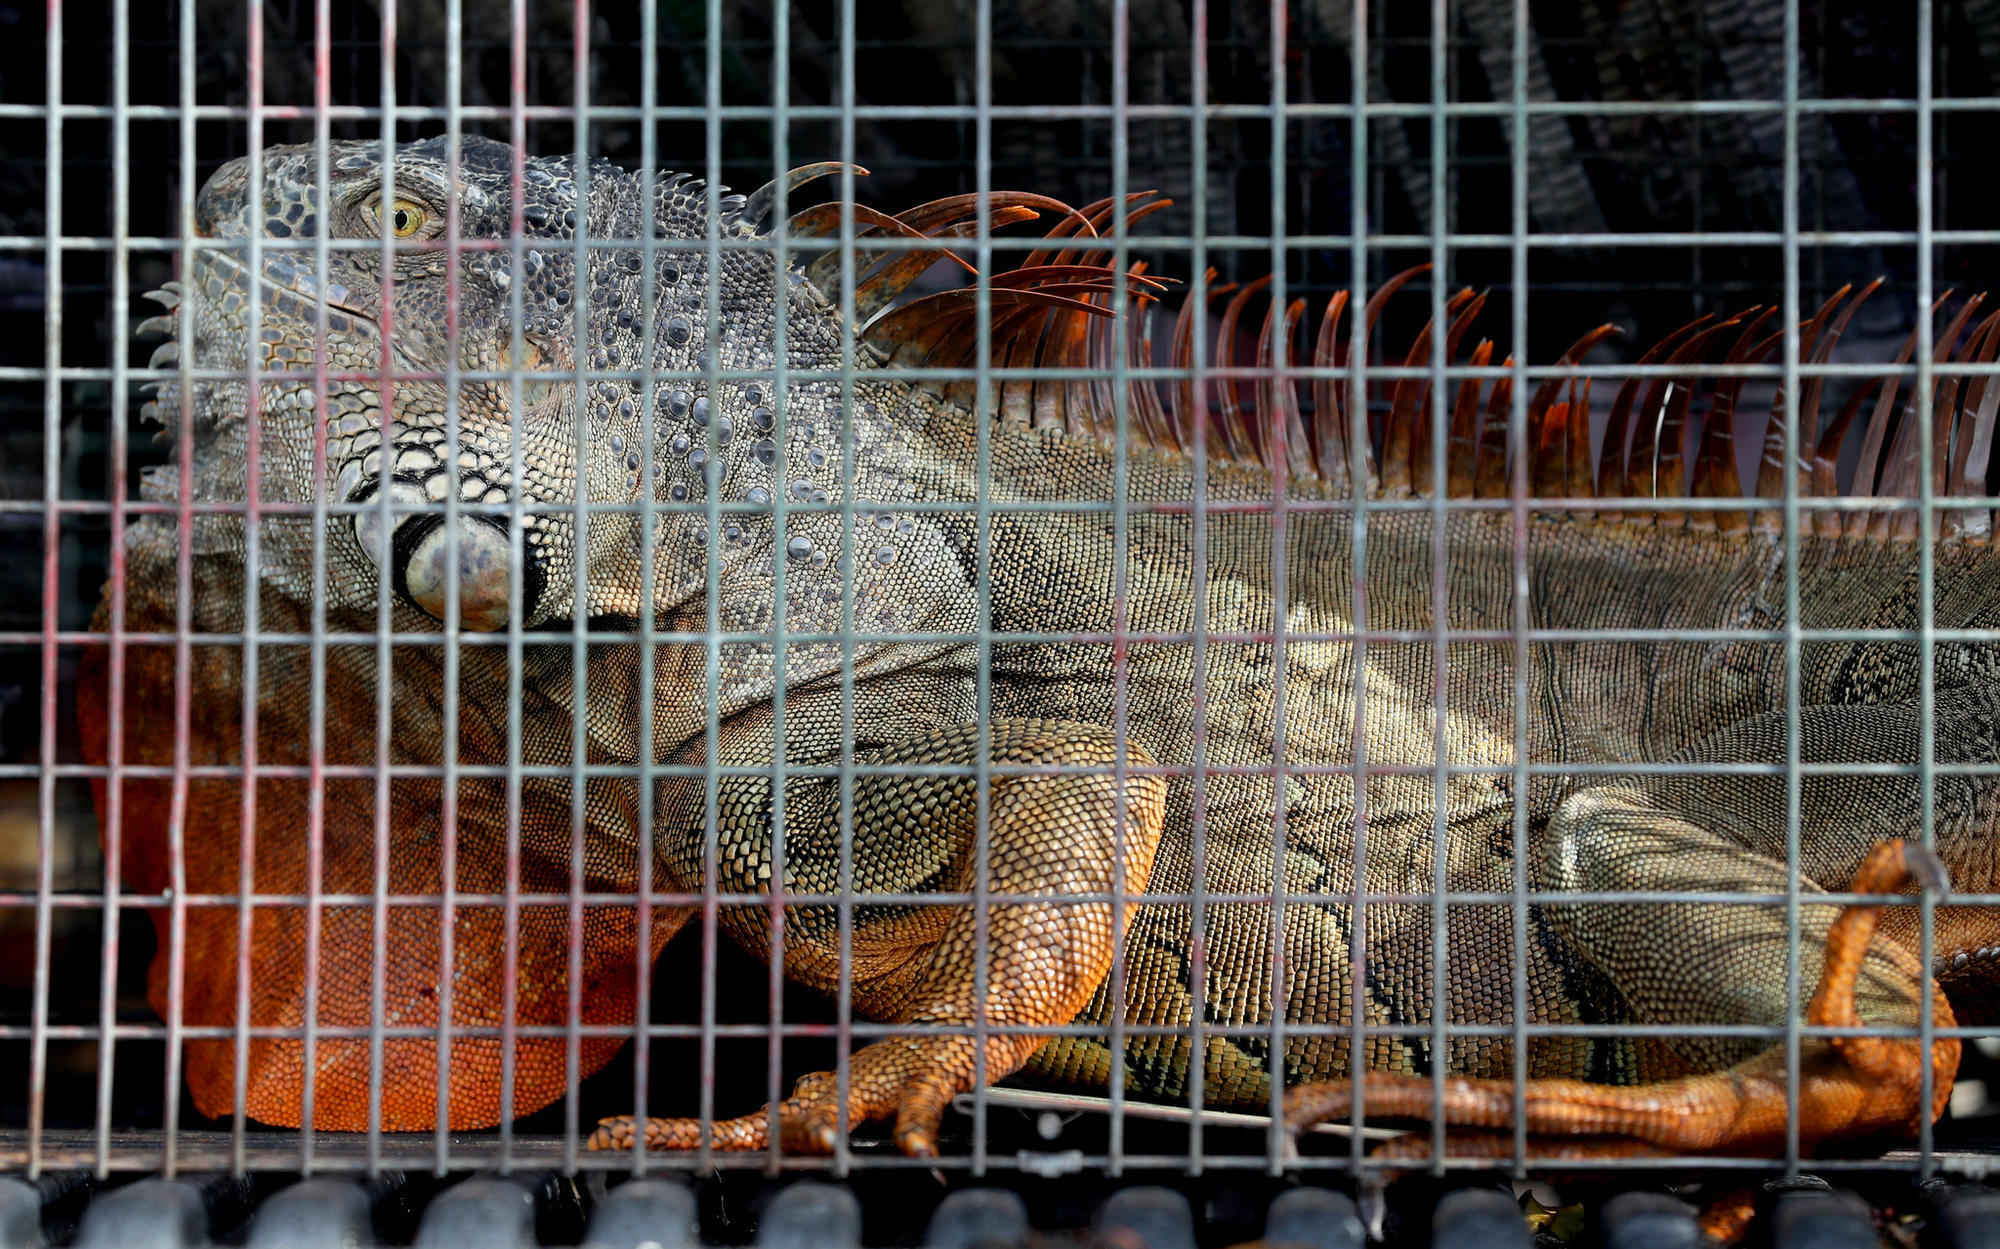 How to kill an iguana (legally) - Sun Sentinel